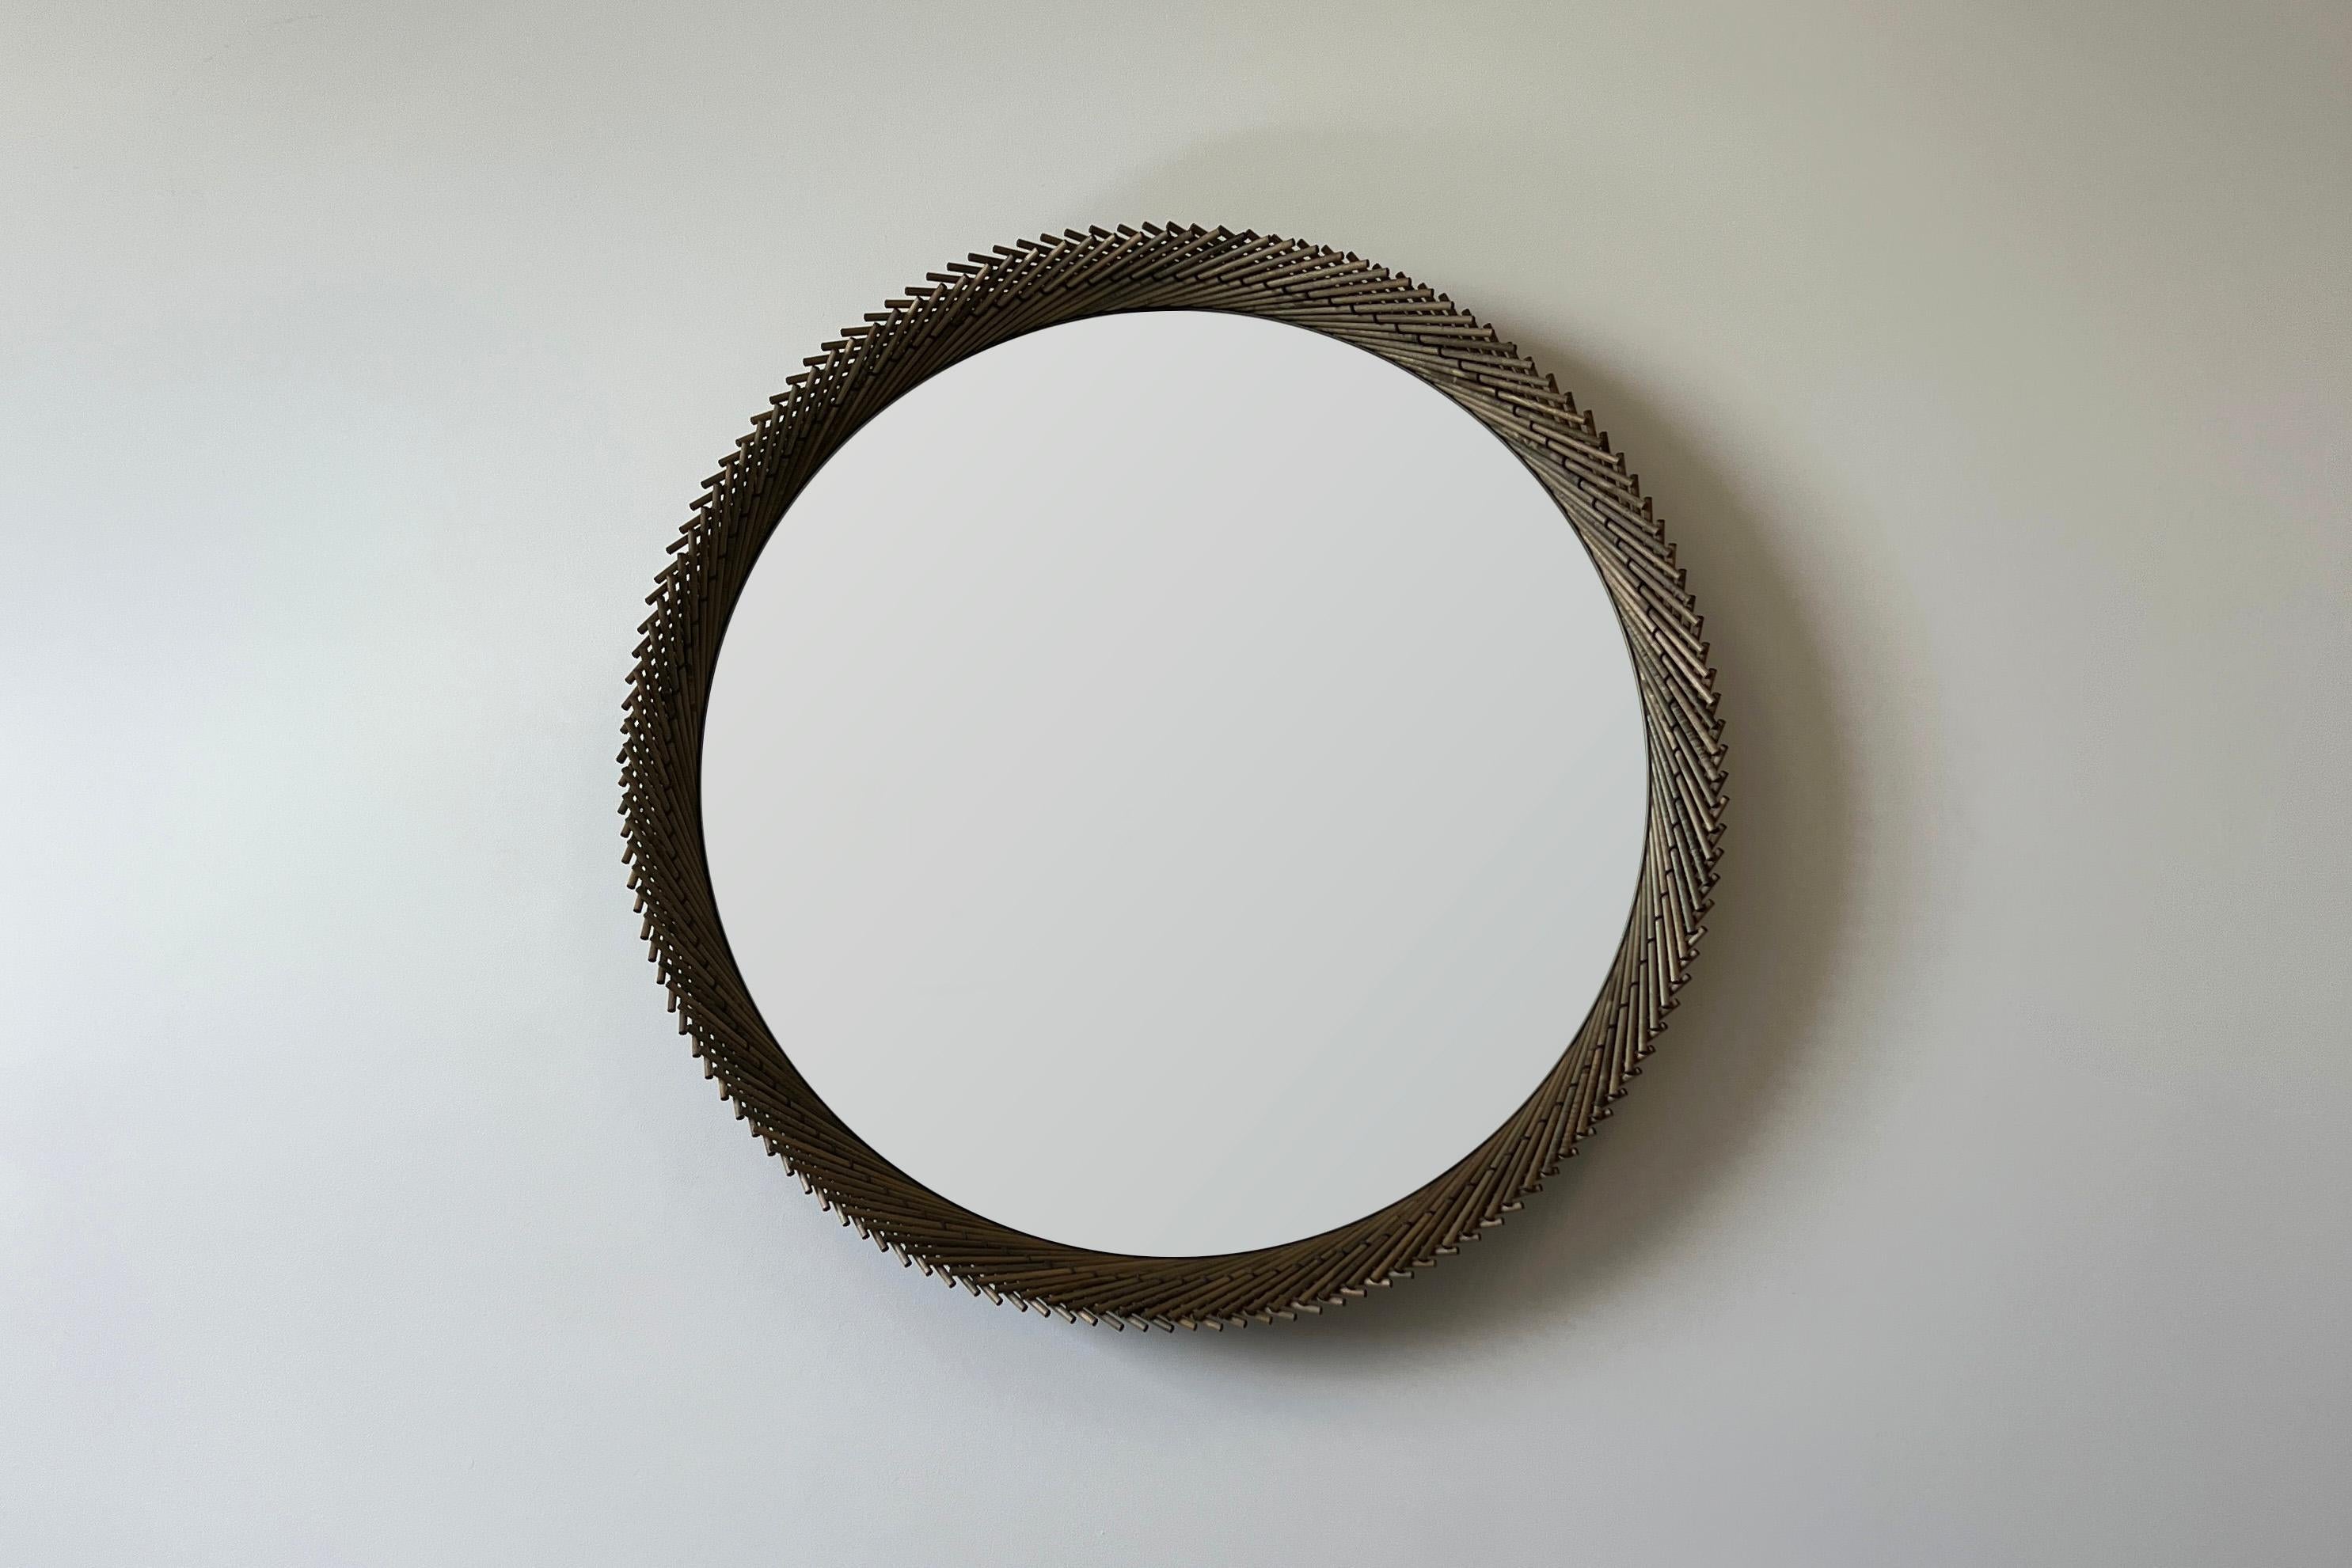 Ebonized Mooda Round Mirror 30 / Oxidized Maple Wood, Clear Mirror by INDO- For Sale